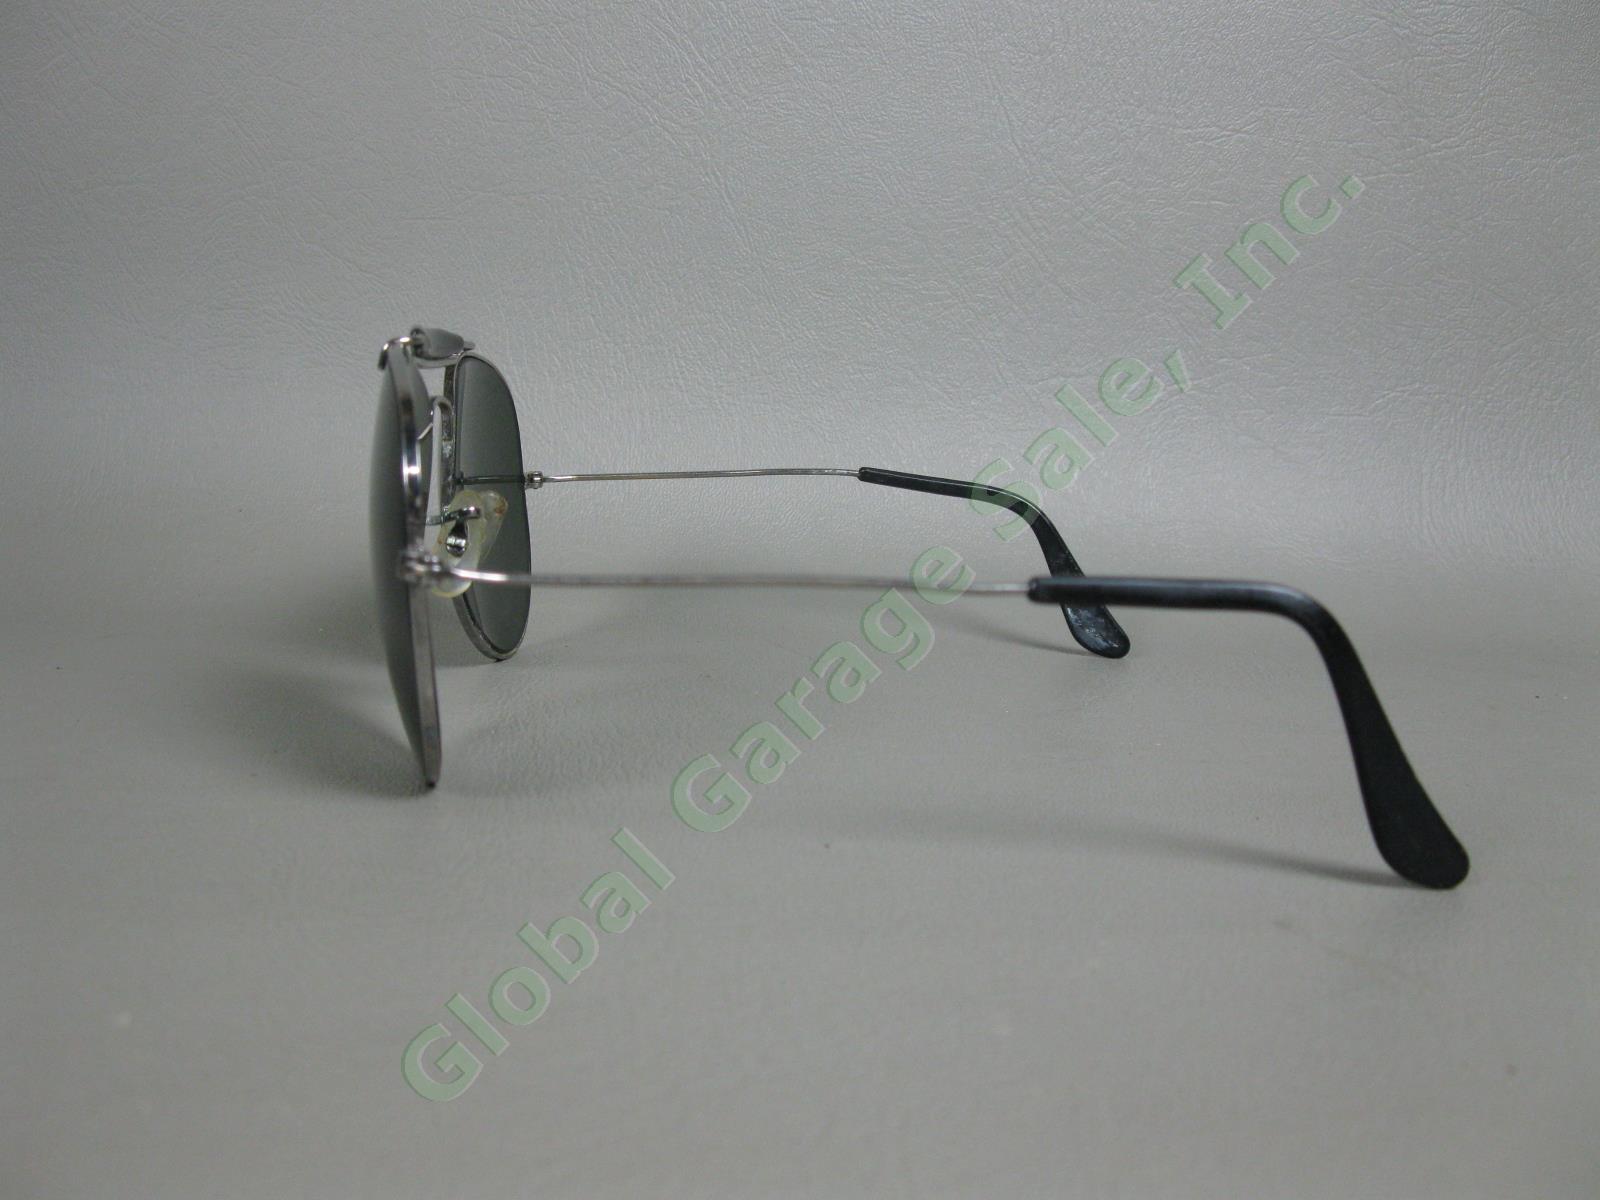 Vtg Bausch + Lomb Ray-Ban Large Aviator Sunglasses 62-14 Green Lenses w/ Case 4